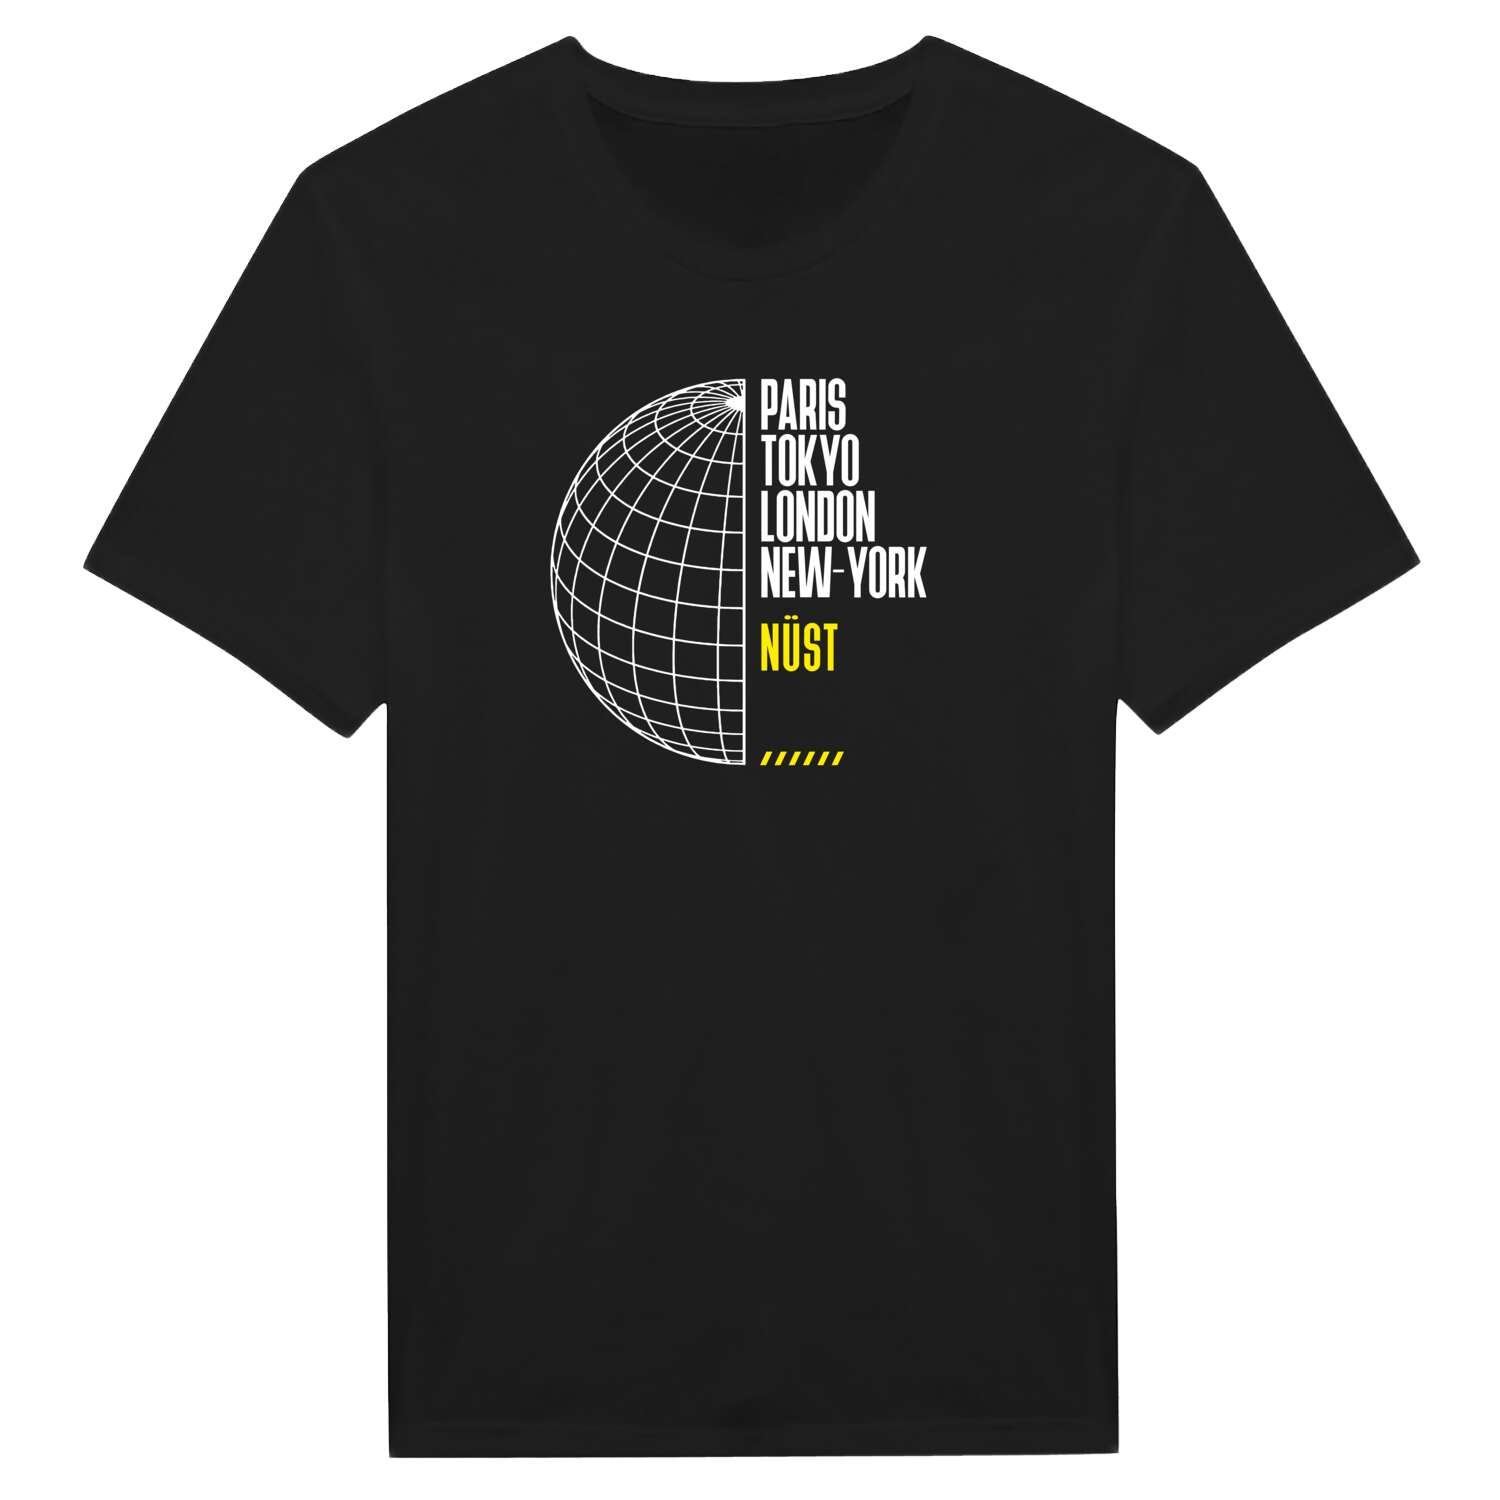 Nüst T-Shirt »Paris Tokyo London«